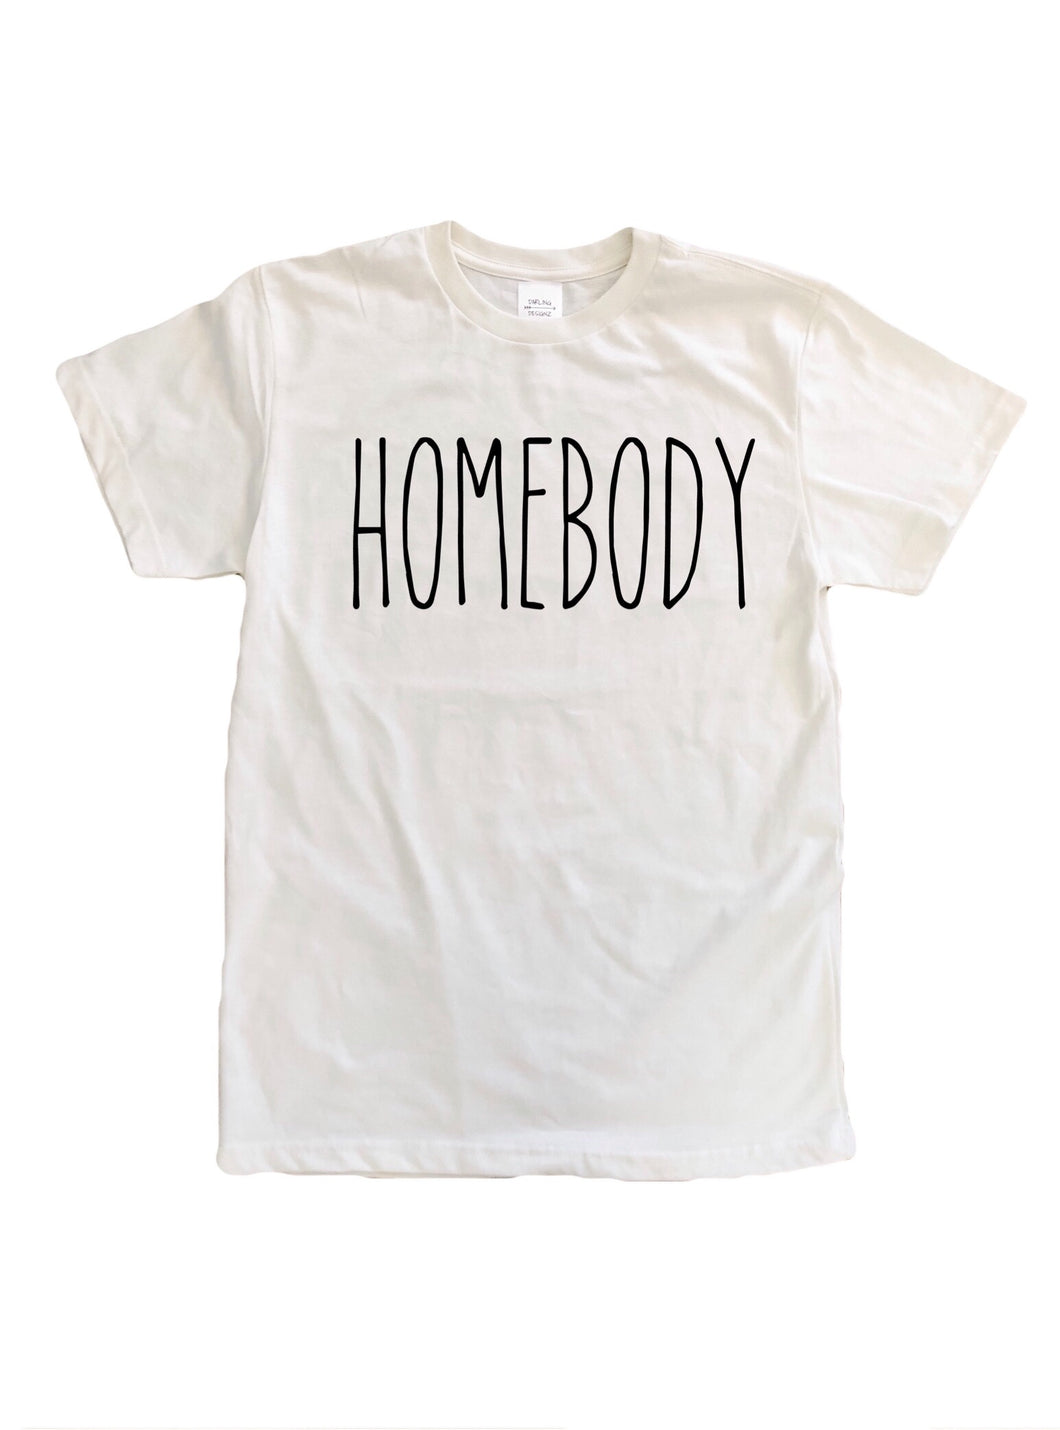 Homebody ladies tshirt in cream